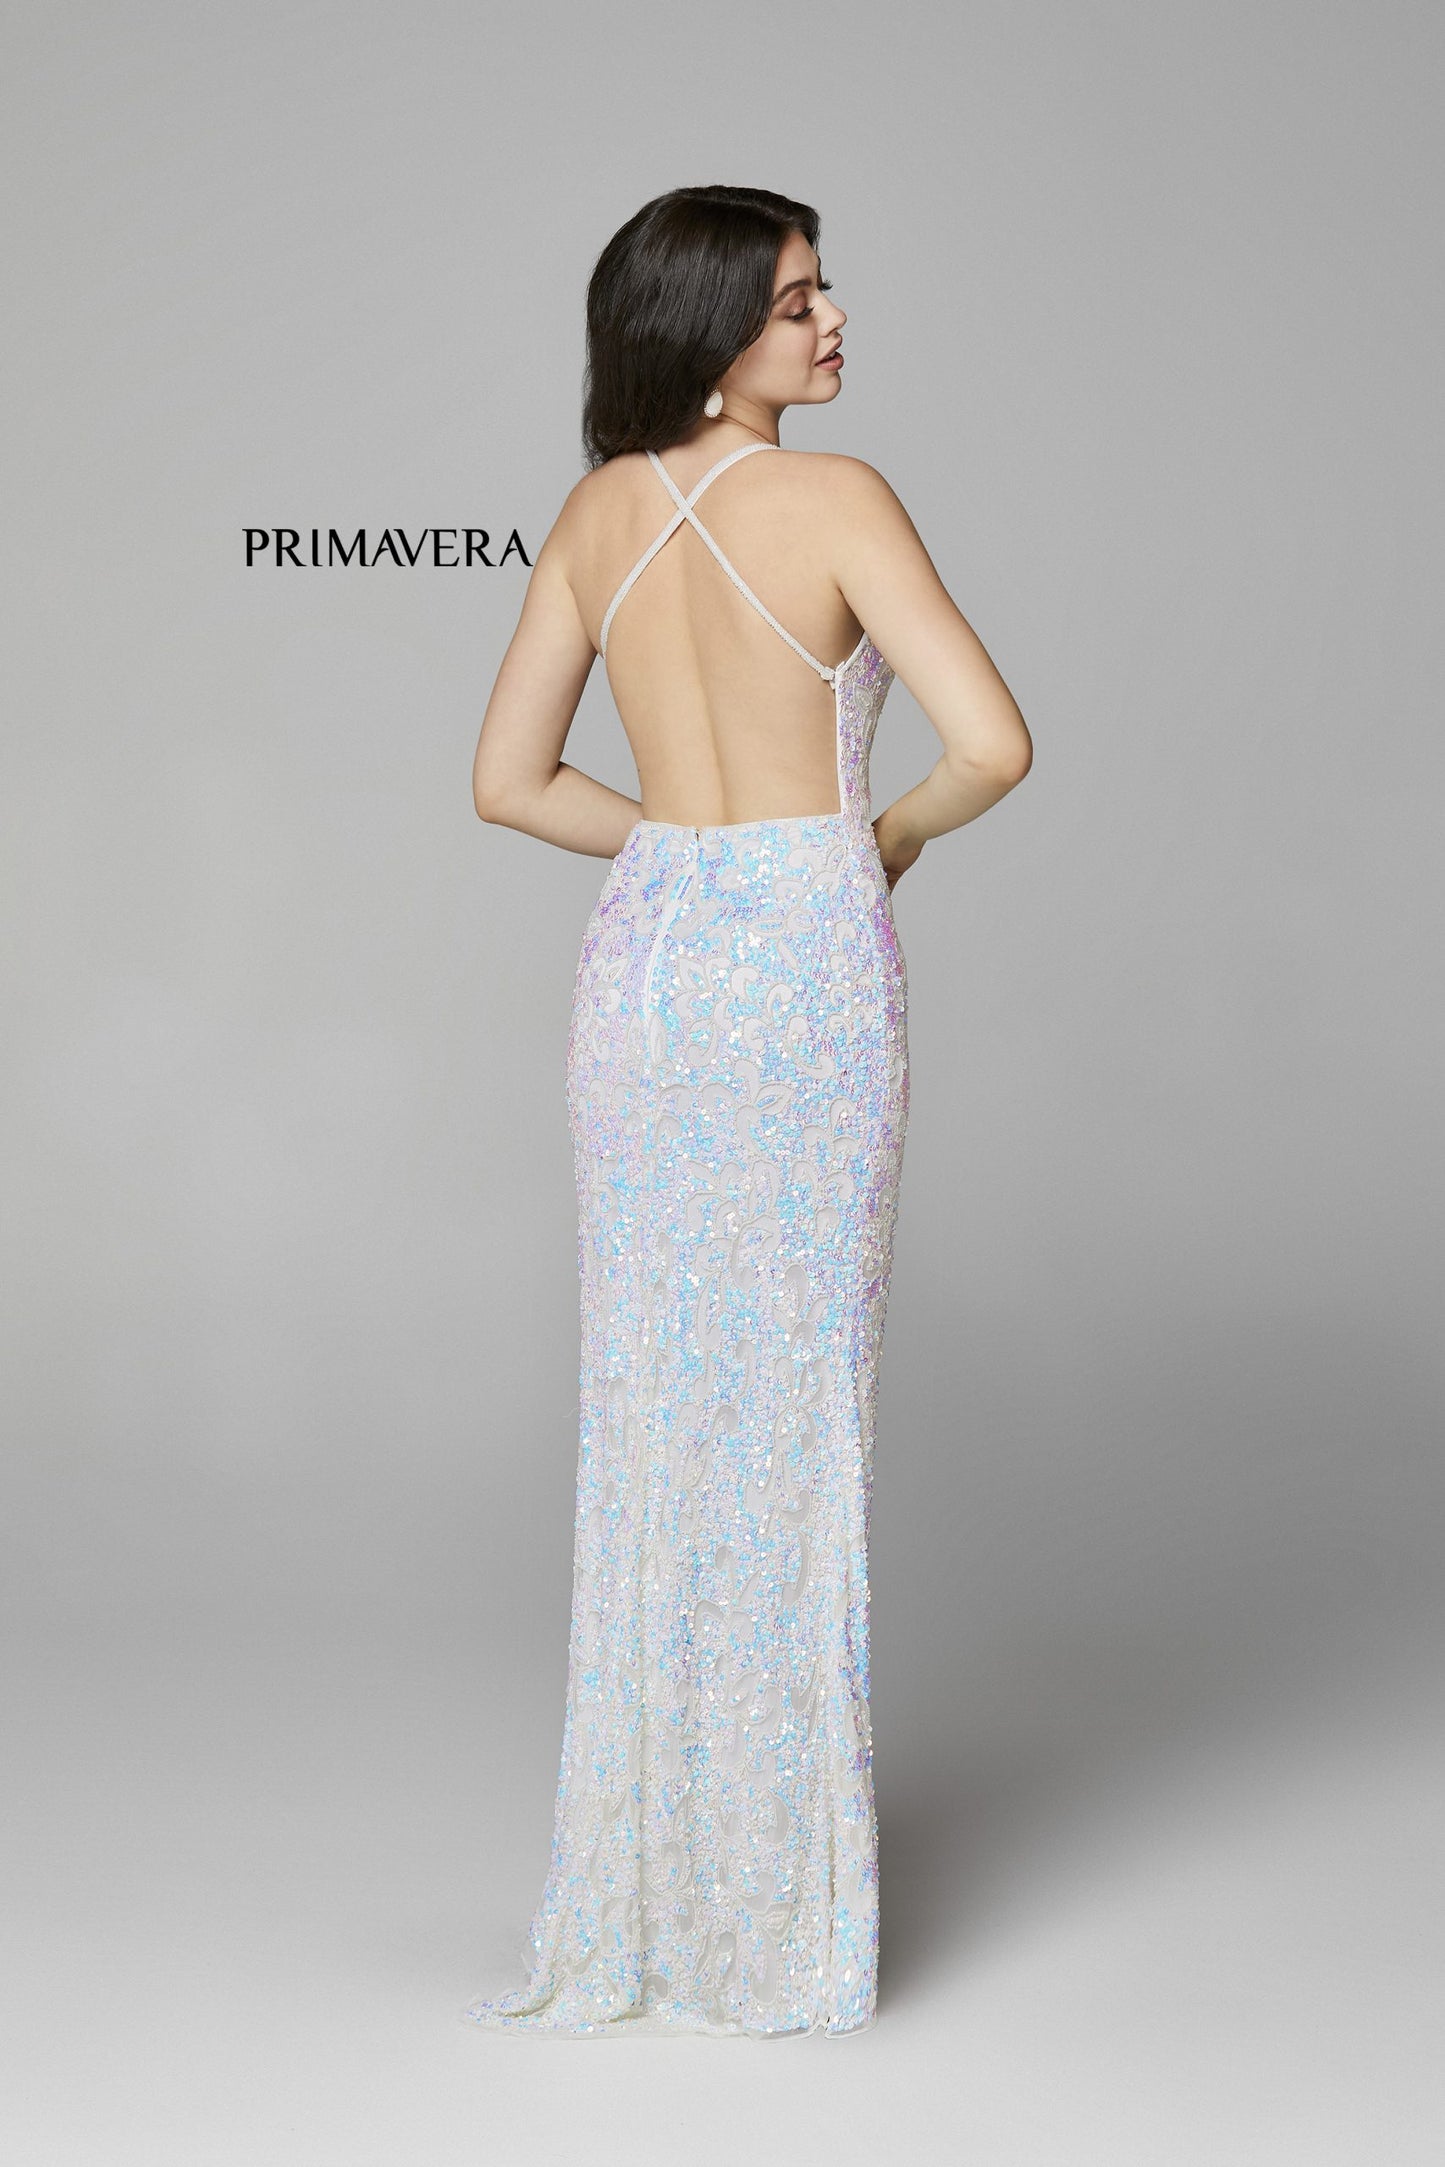 Primavera Couture 3295 Size 4 Cream Prom Dress V Neckline Sequins long evening gown